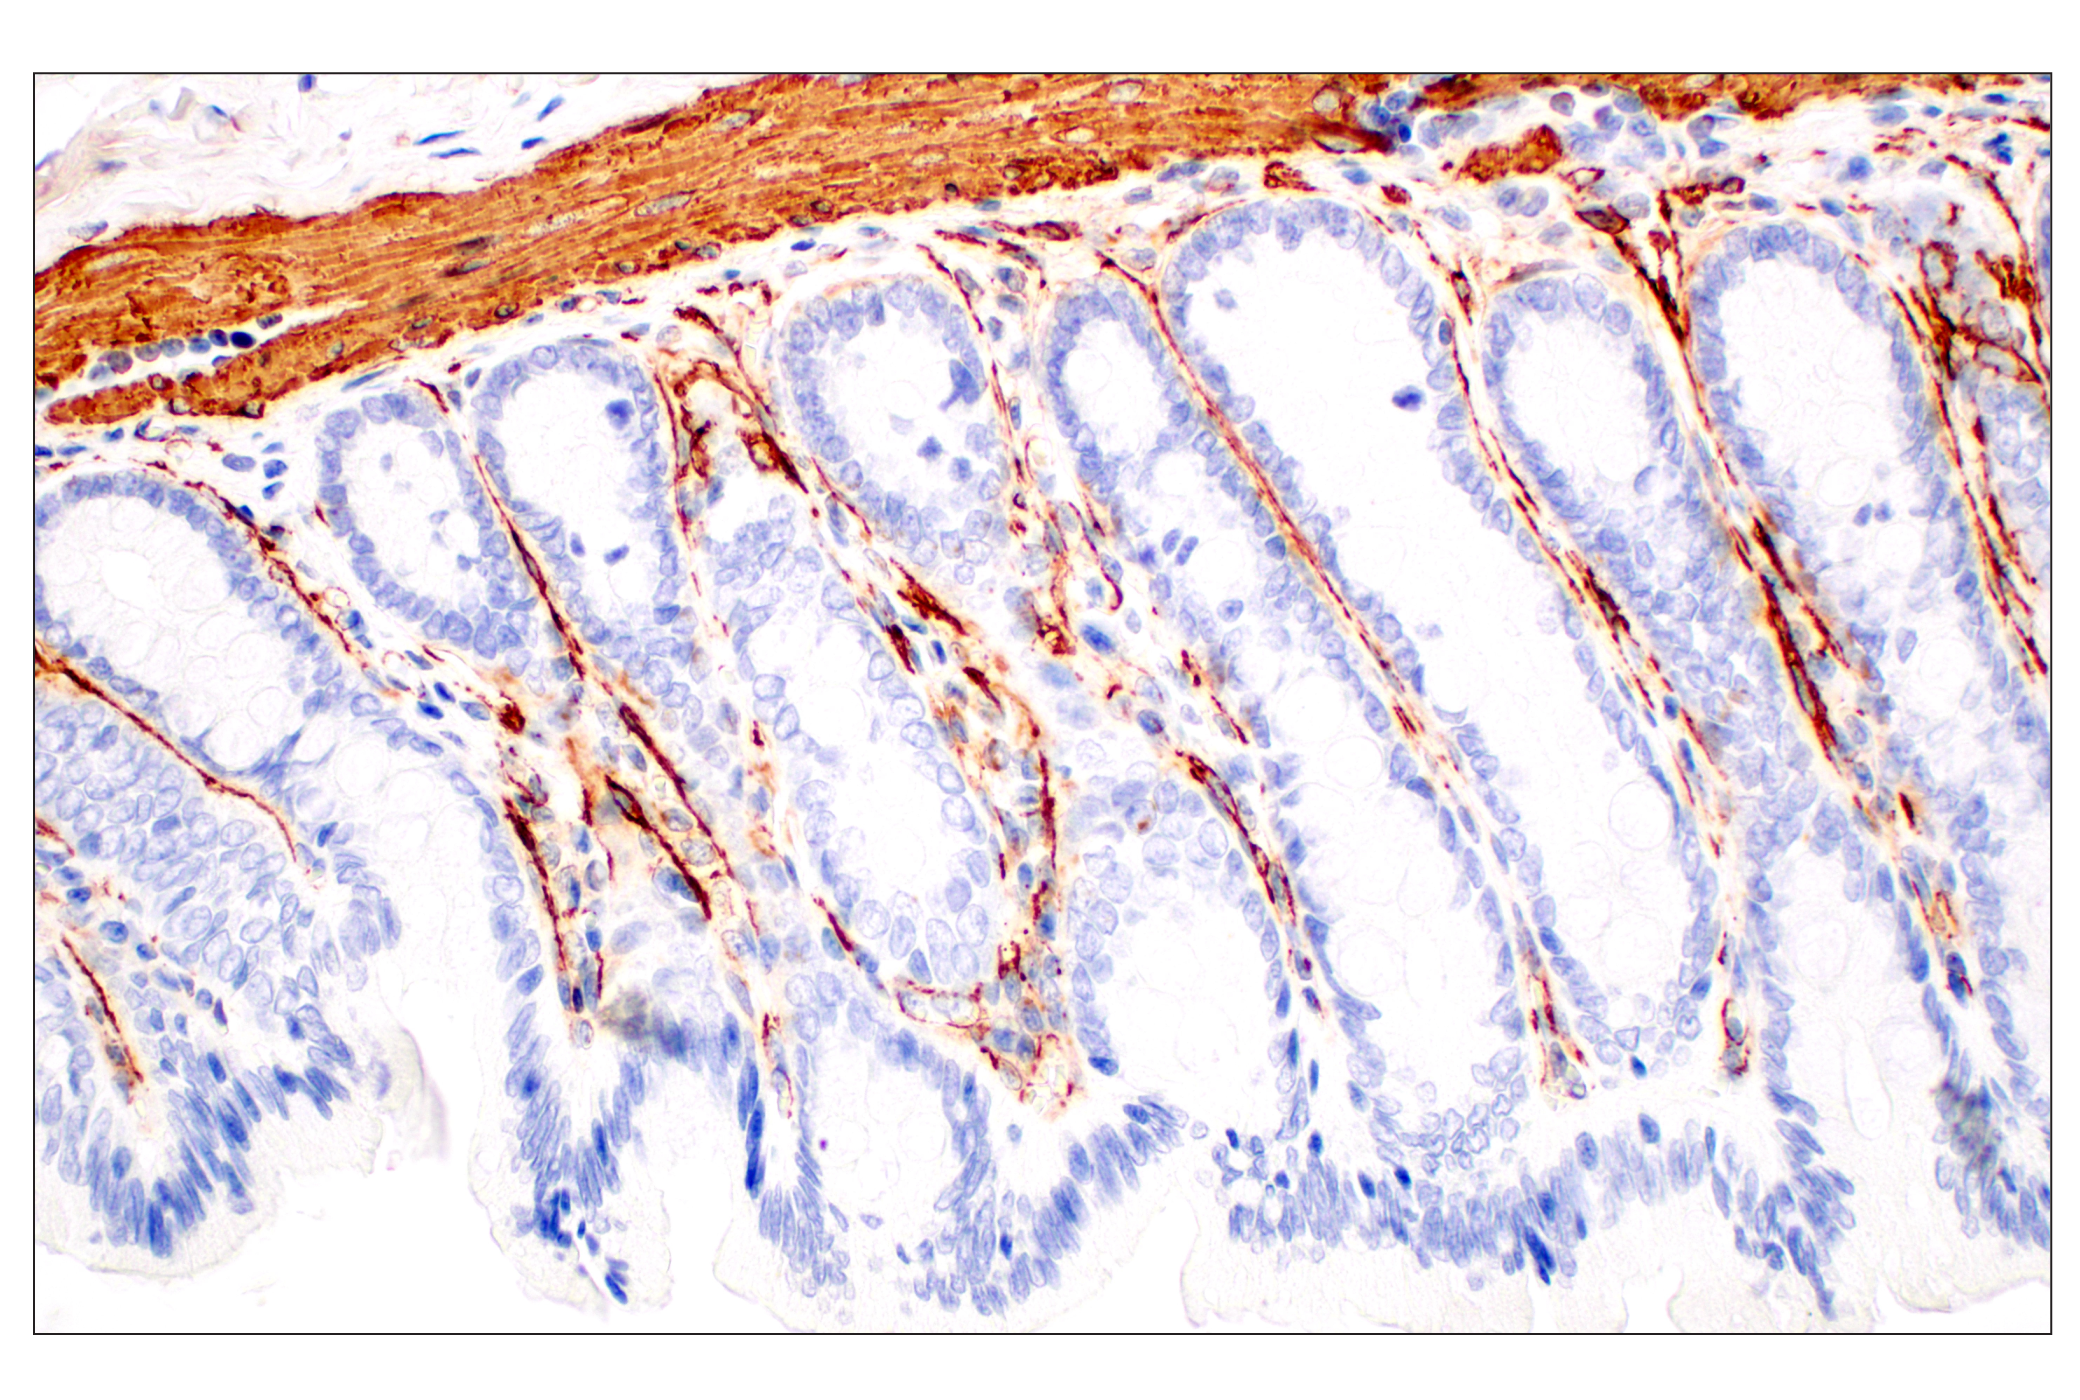  Image 53: Cancer Associated Fibroblast Marker Antibody Sampler Kit